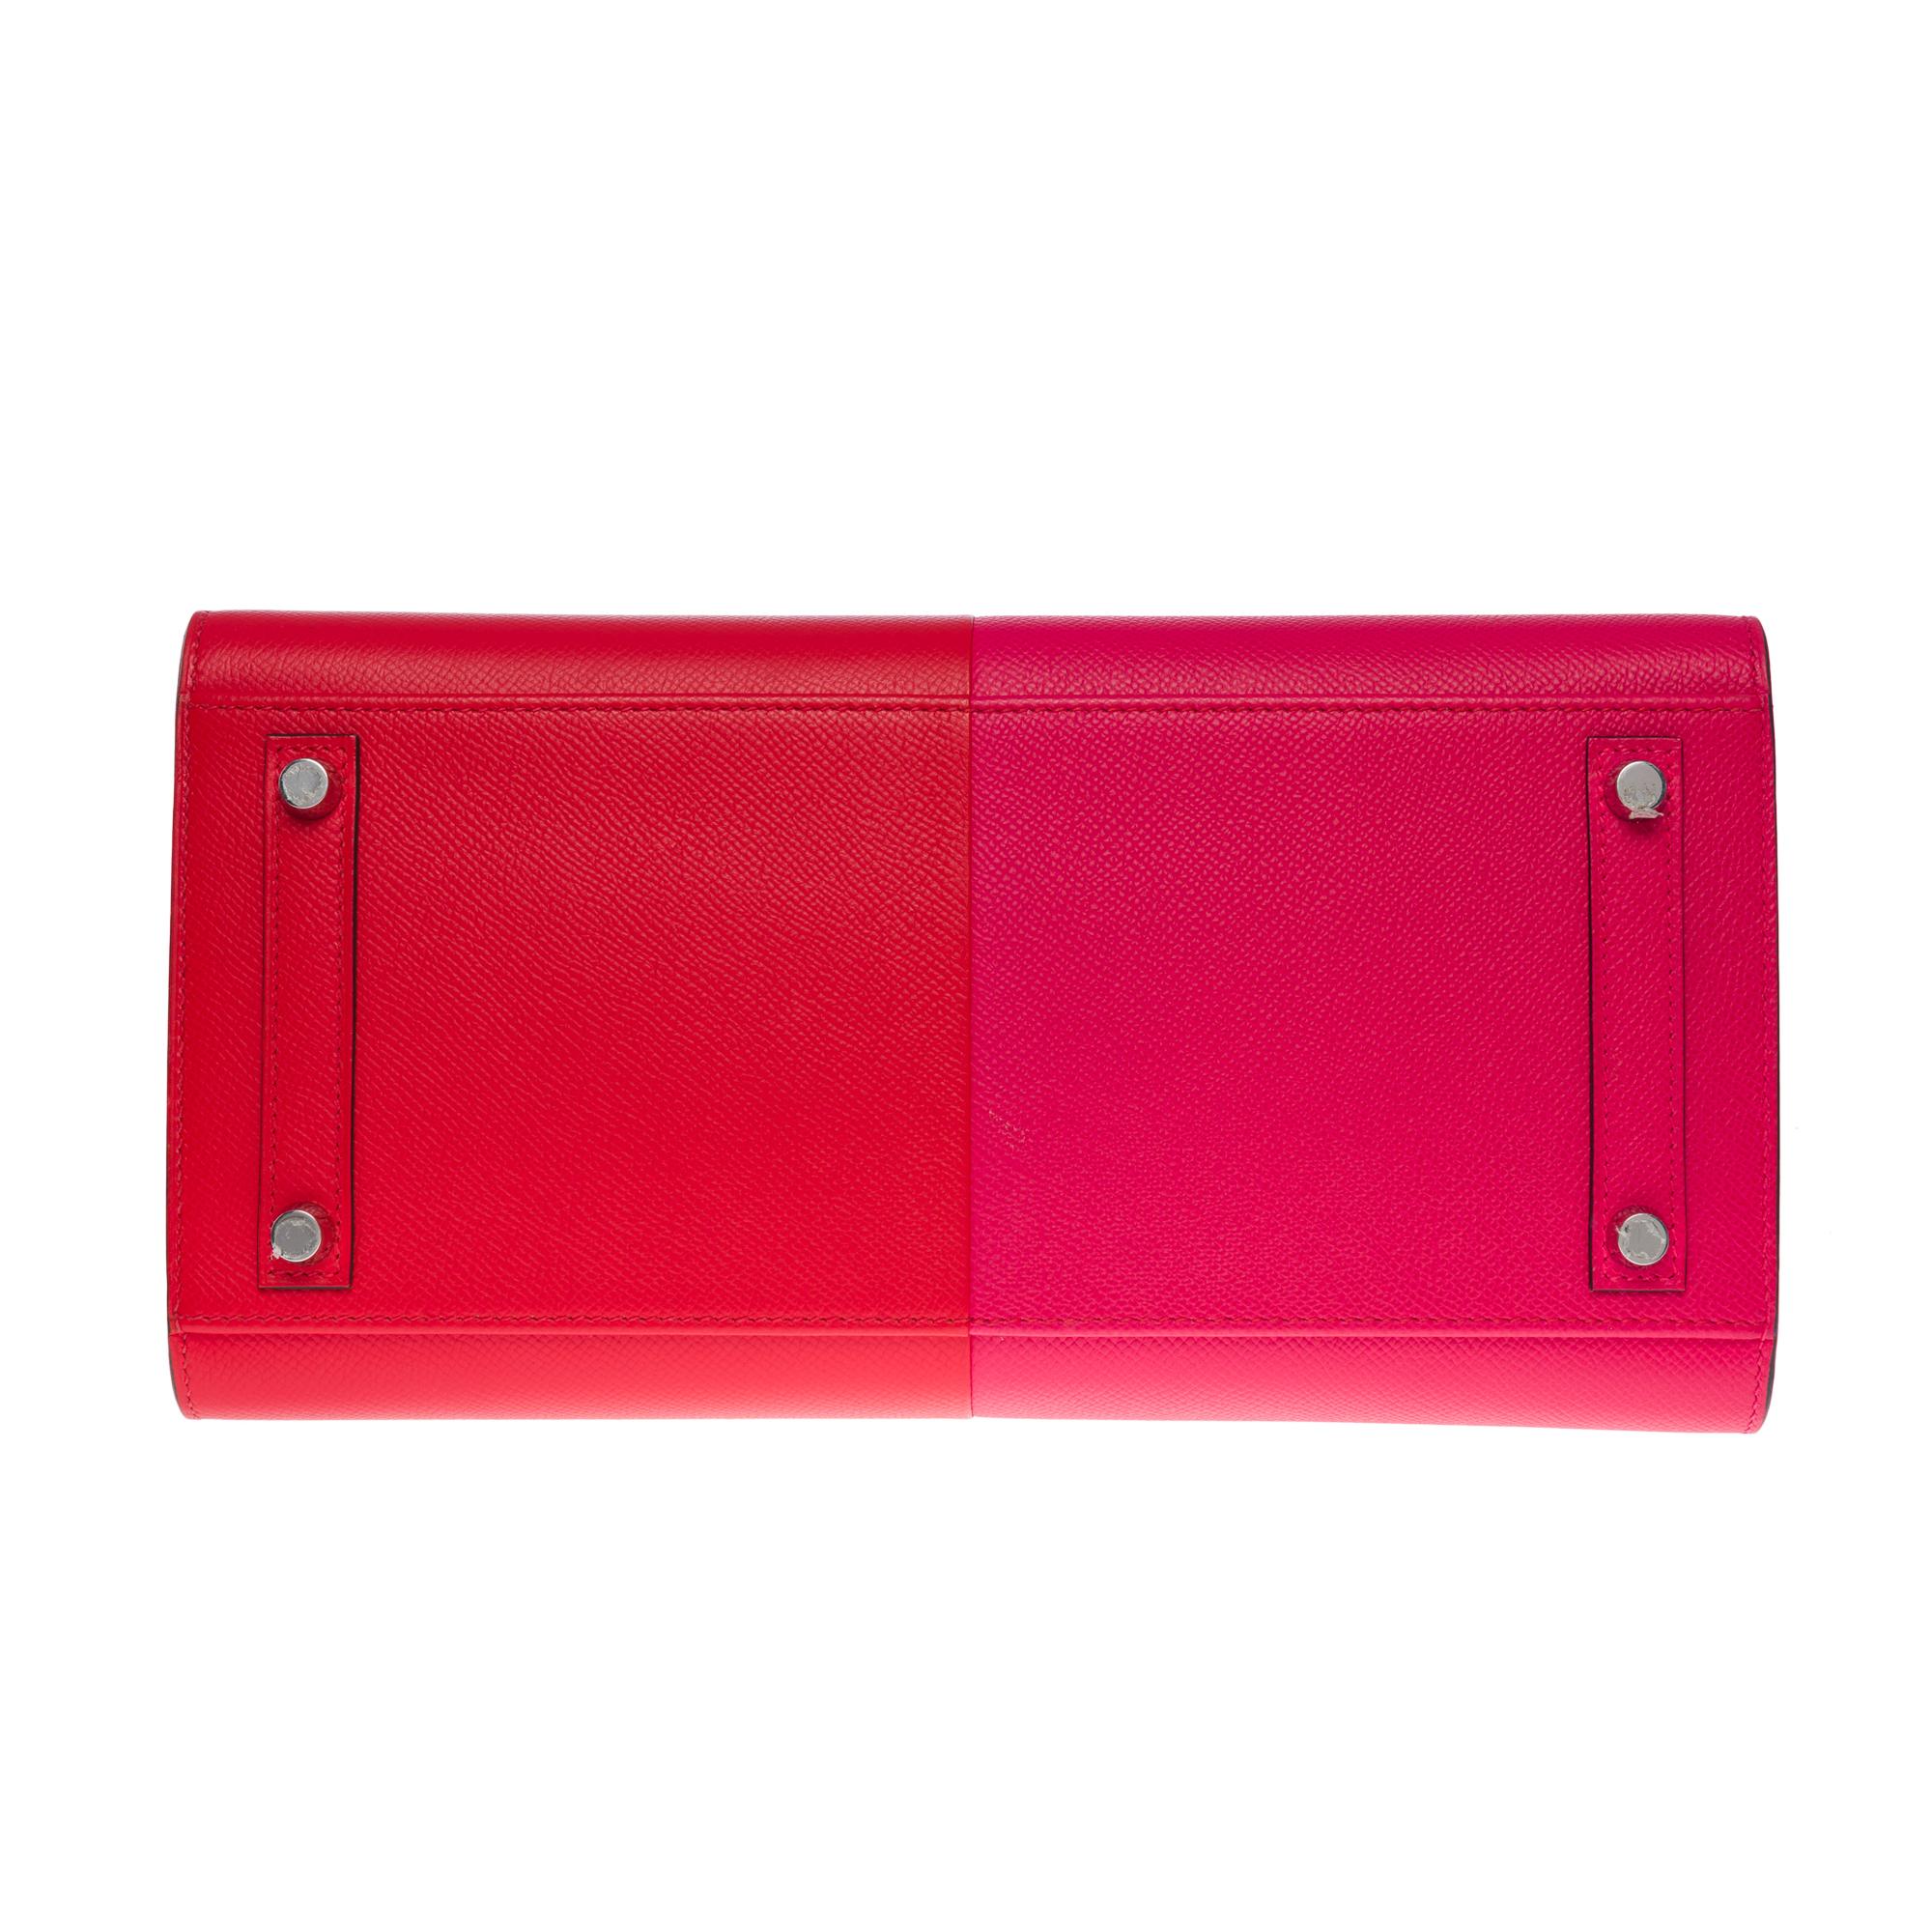 New Hermès Kazak  Birkin 30 handbag in Red/Pink Epsom leather, SHW For Sale 7